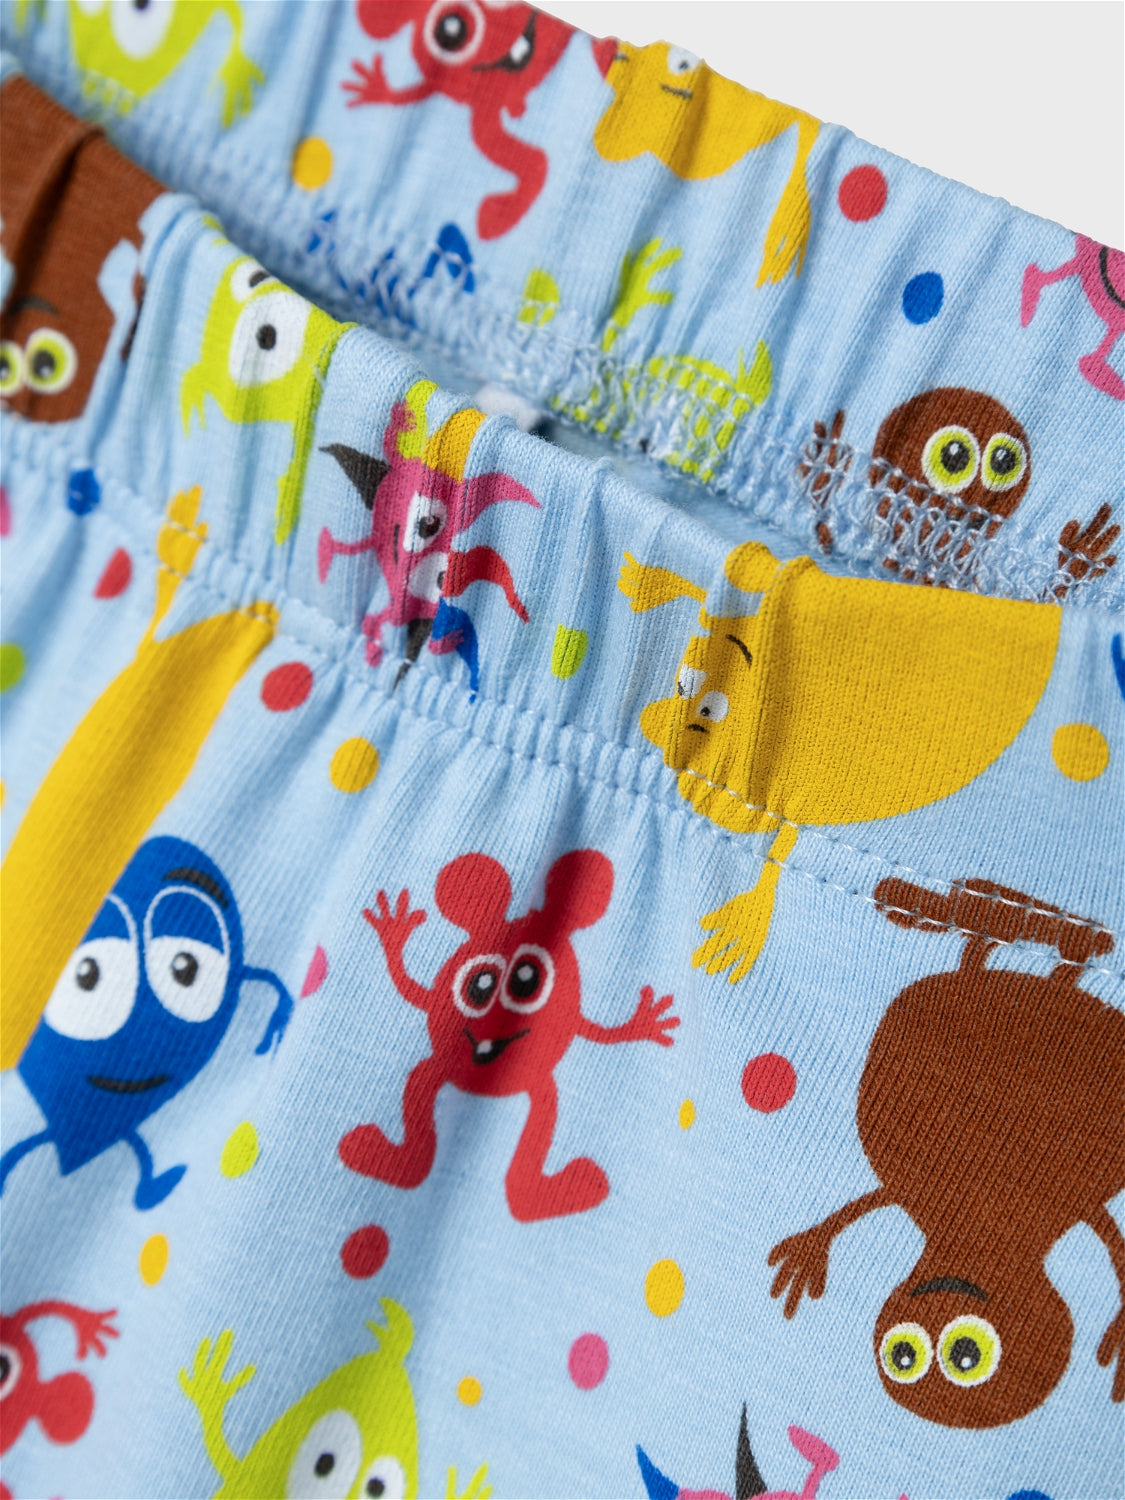 Babblarnapyjamas - pyjamas med Babblarna